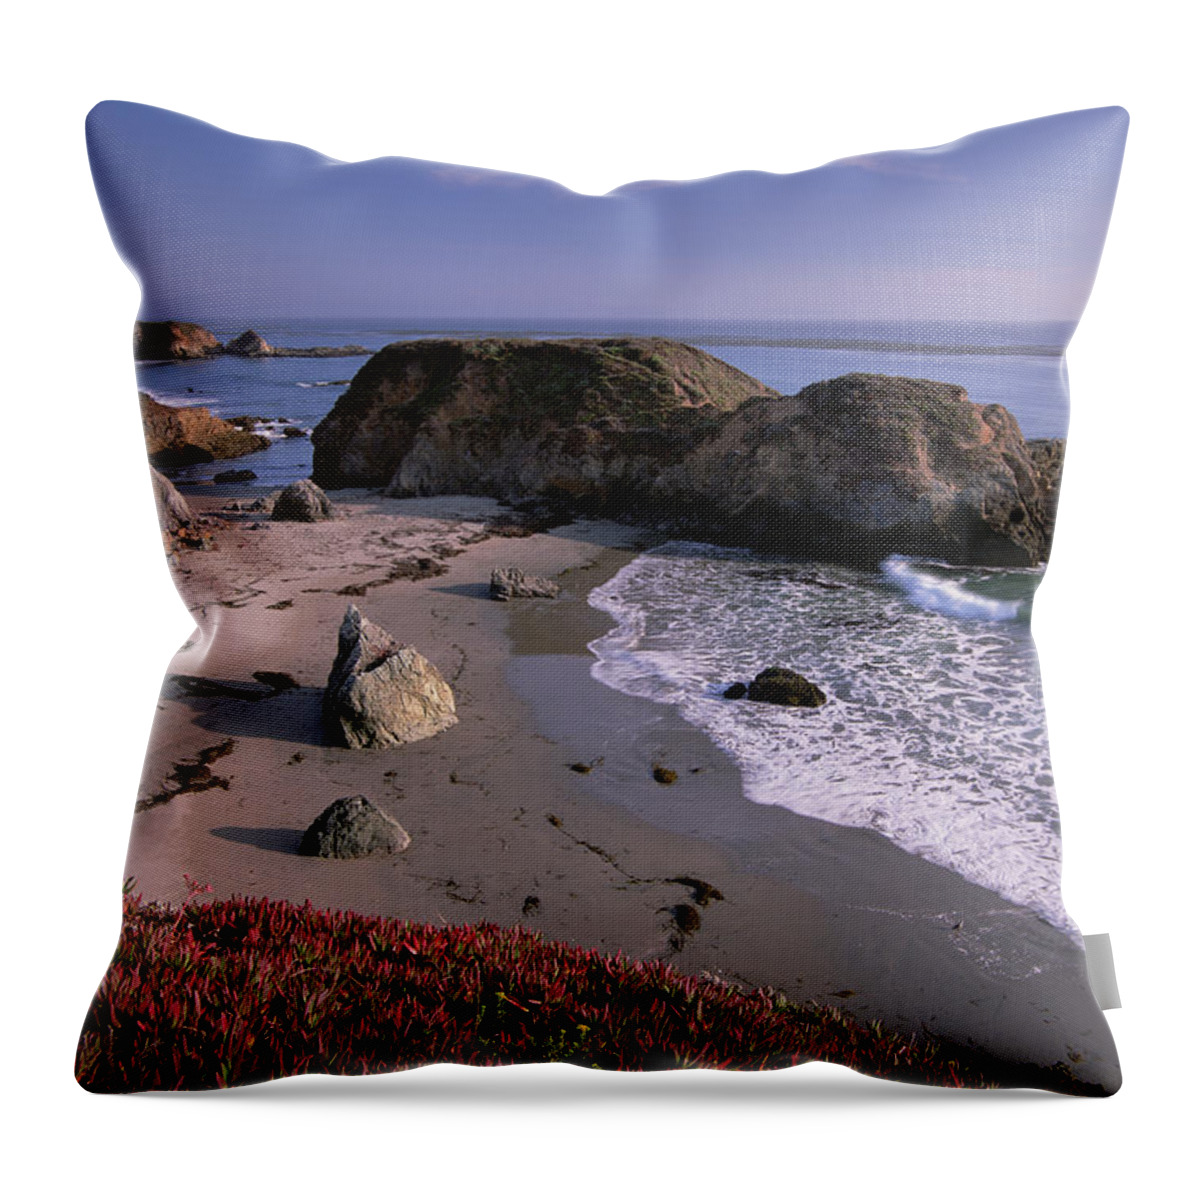 00174586 Throw Pillow featuring the photograph Beach Near San Simeon Creek With Ice by Tim Fitzharris